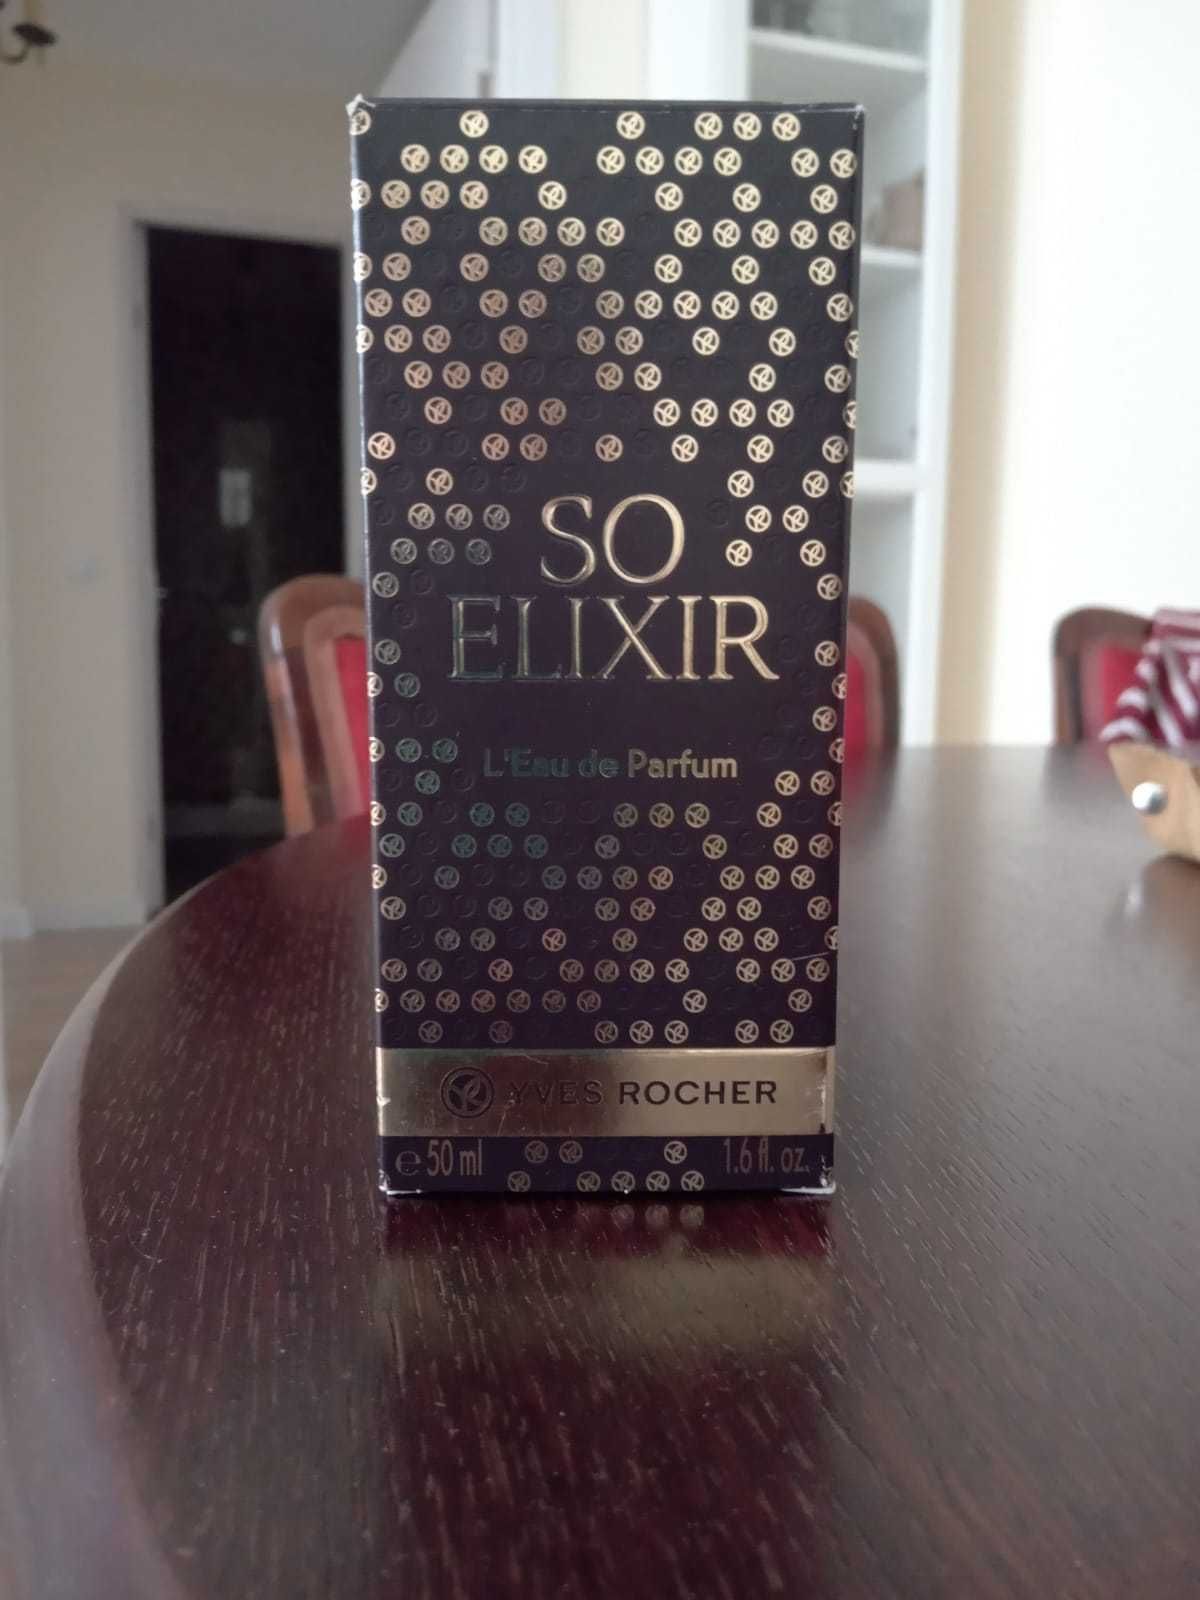 SO Elixir Yves Rocher L'eau de parfum